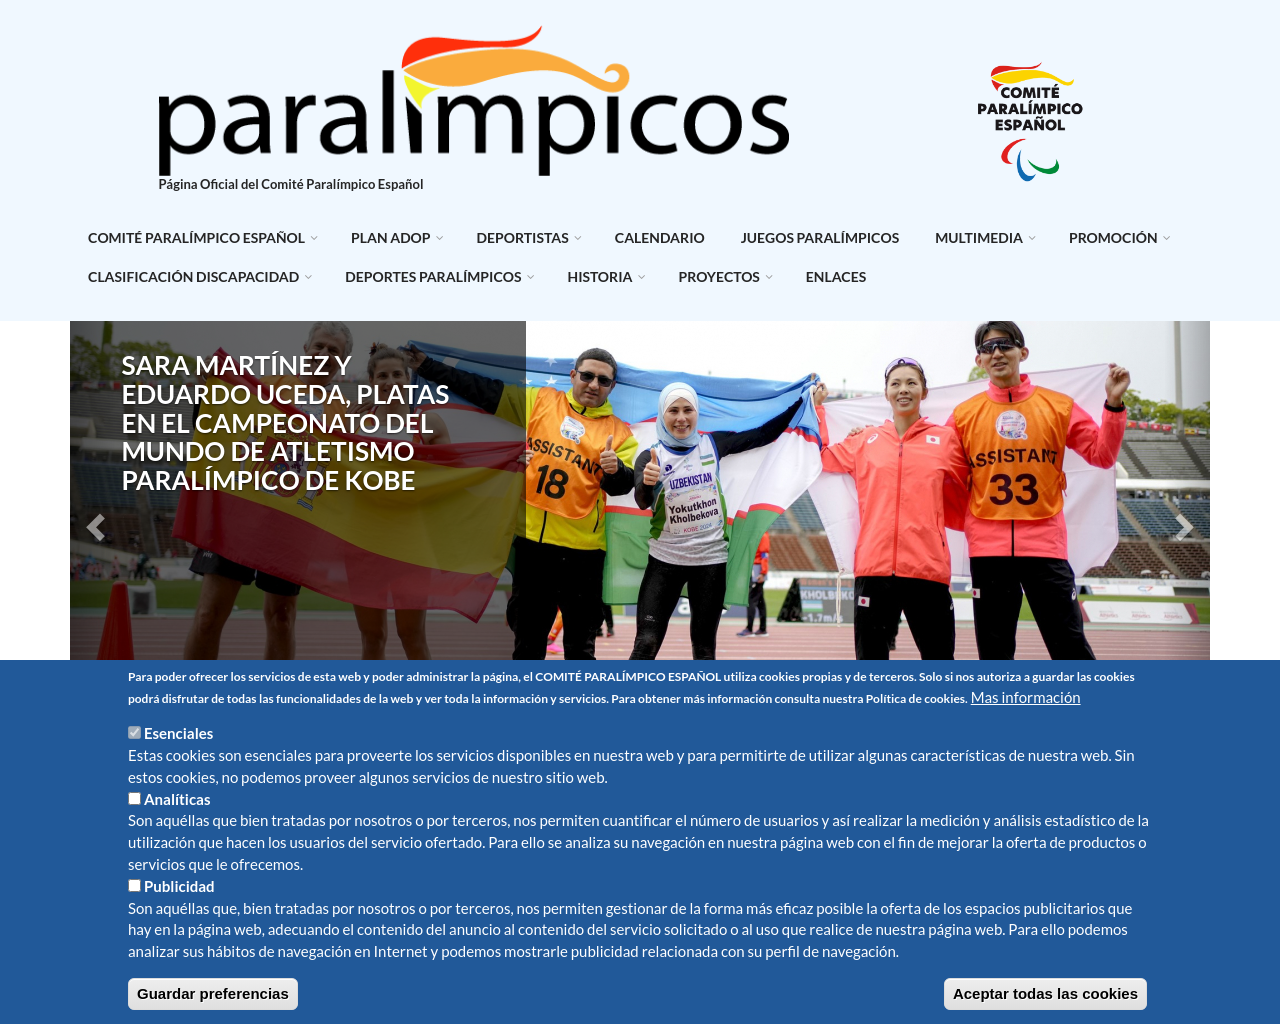 paralimpicos.es